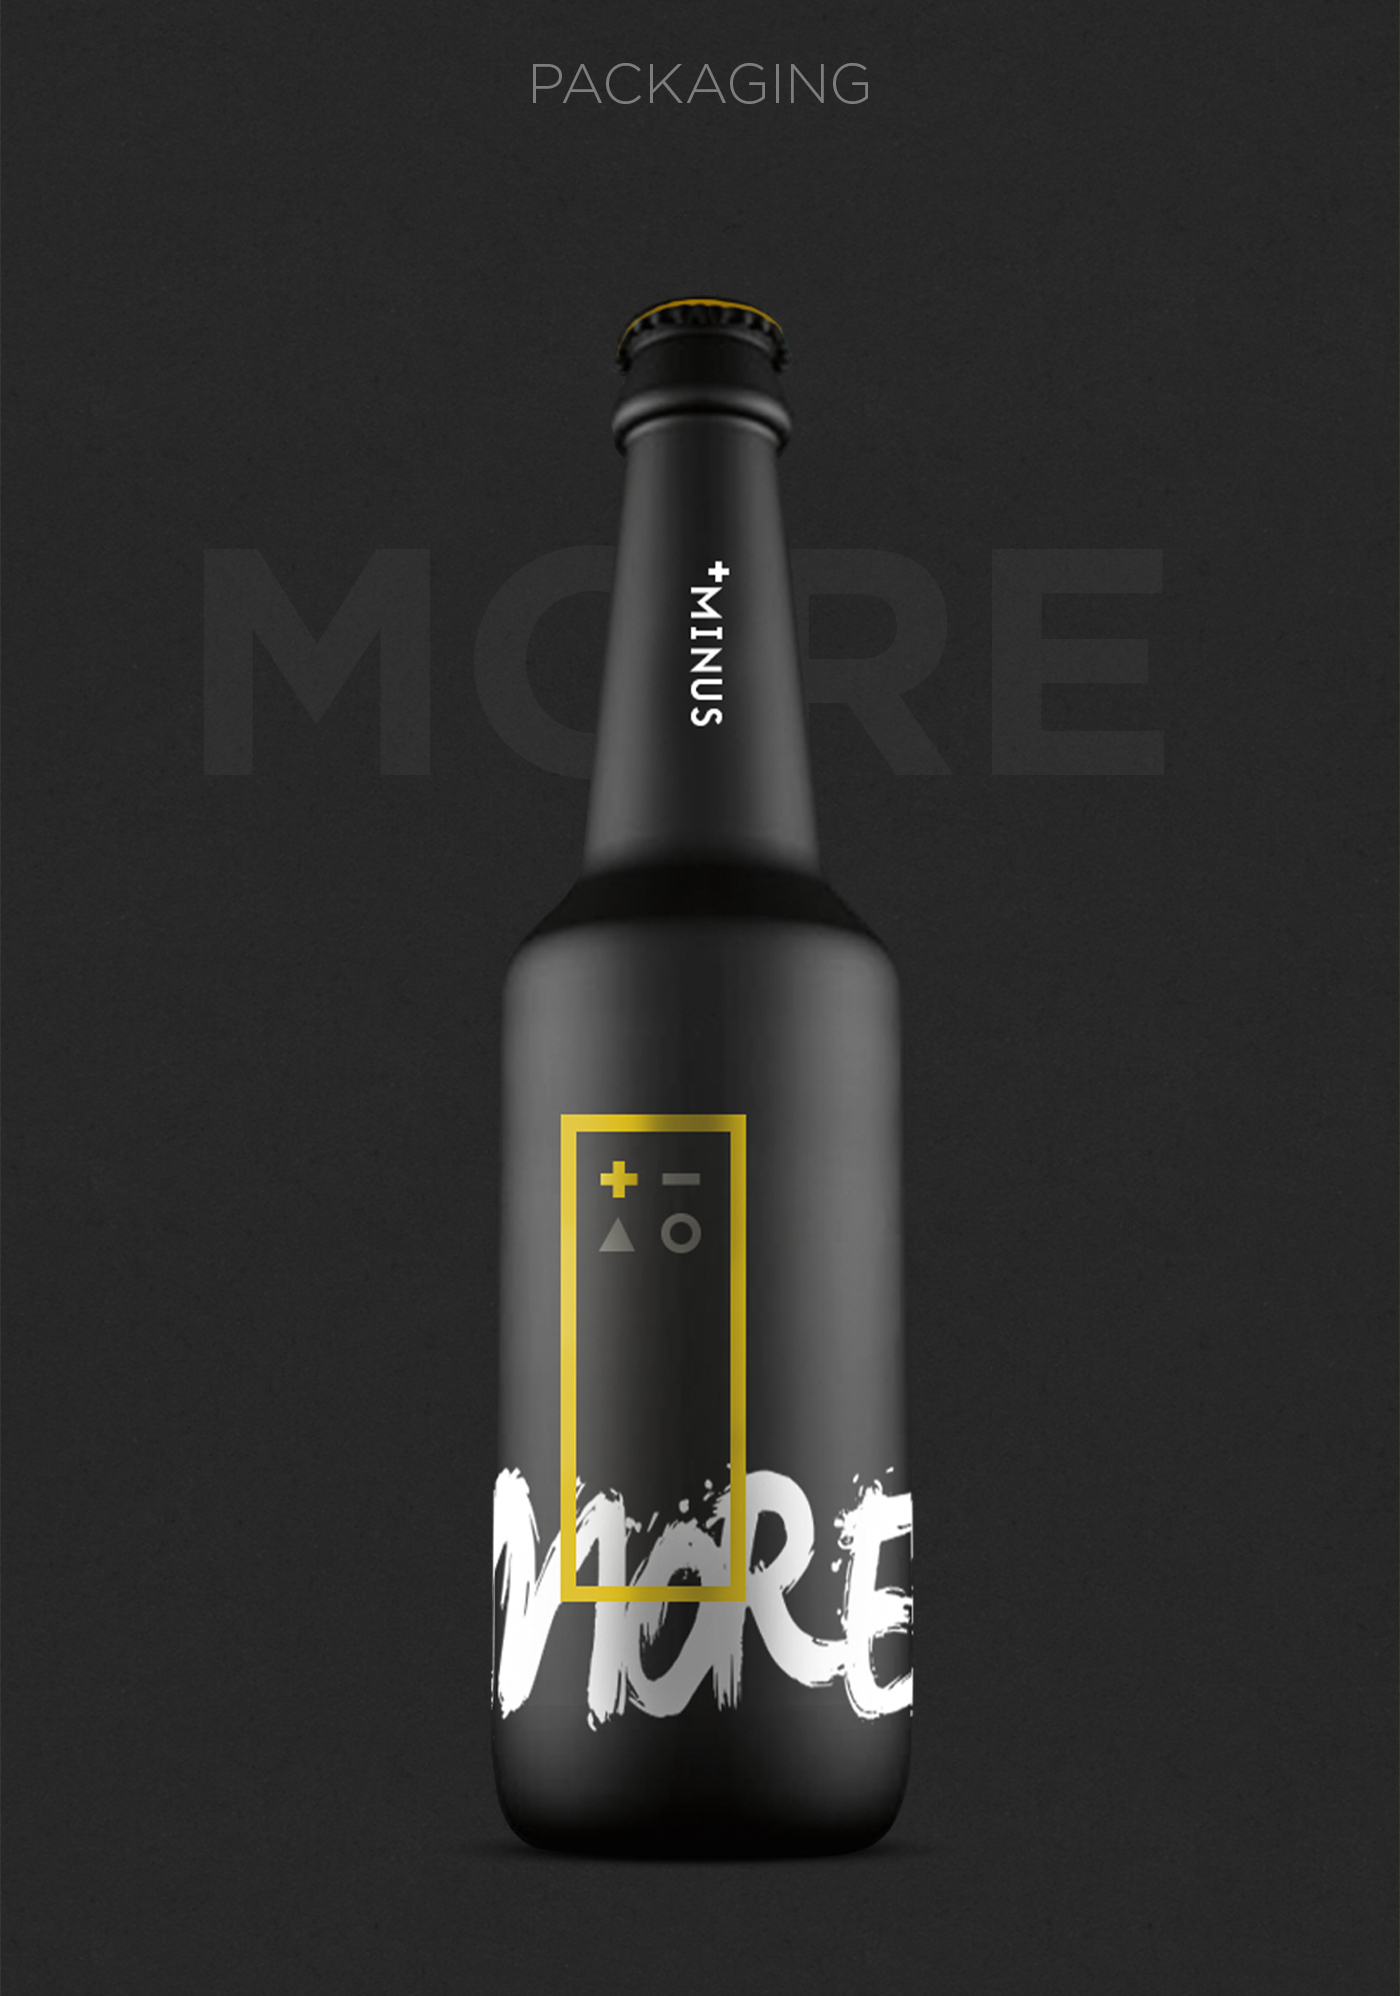 Plusminus beer design black bottle packagingdesign advert campaign akademie u5 student